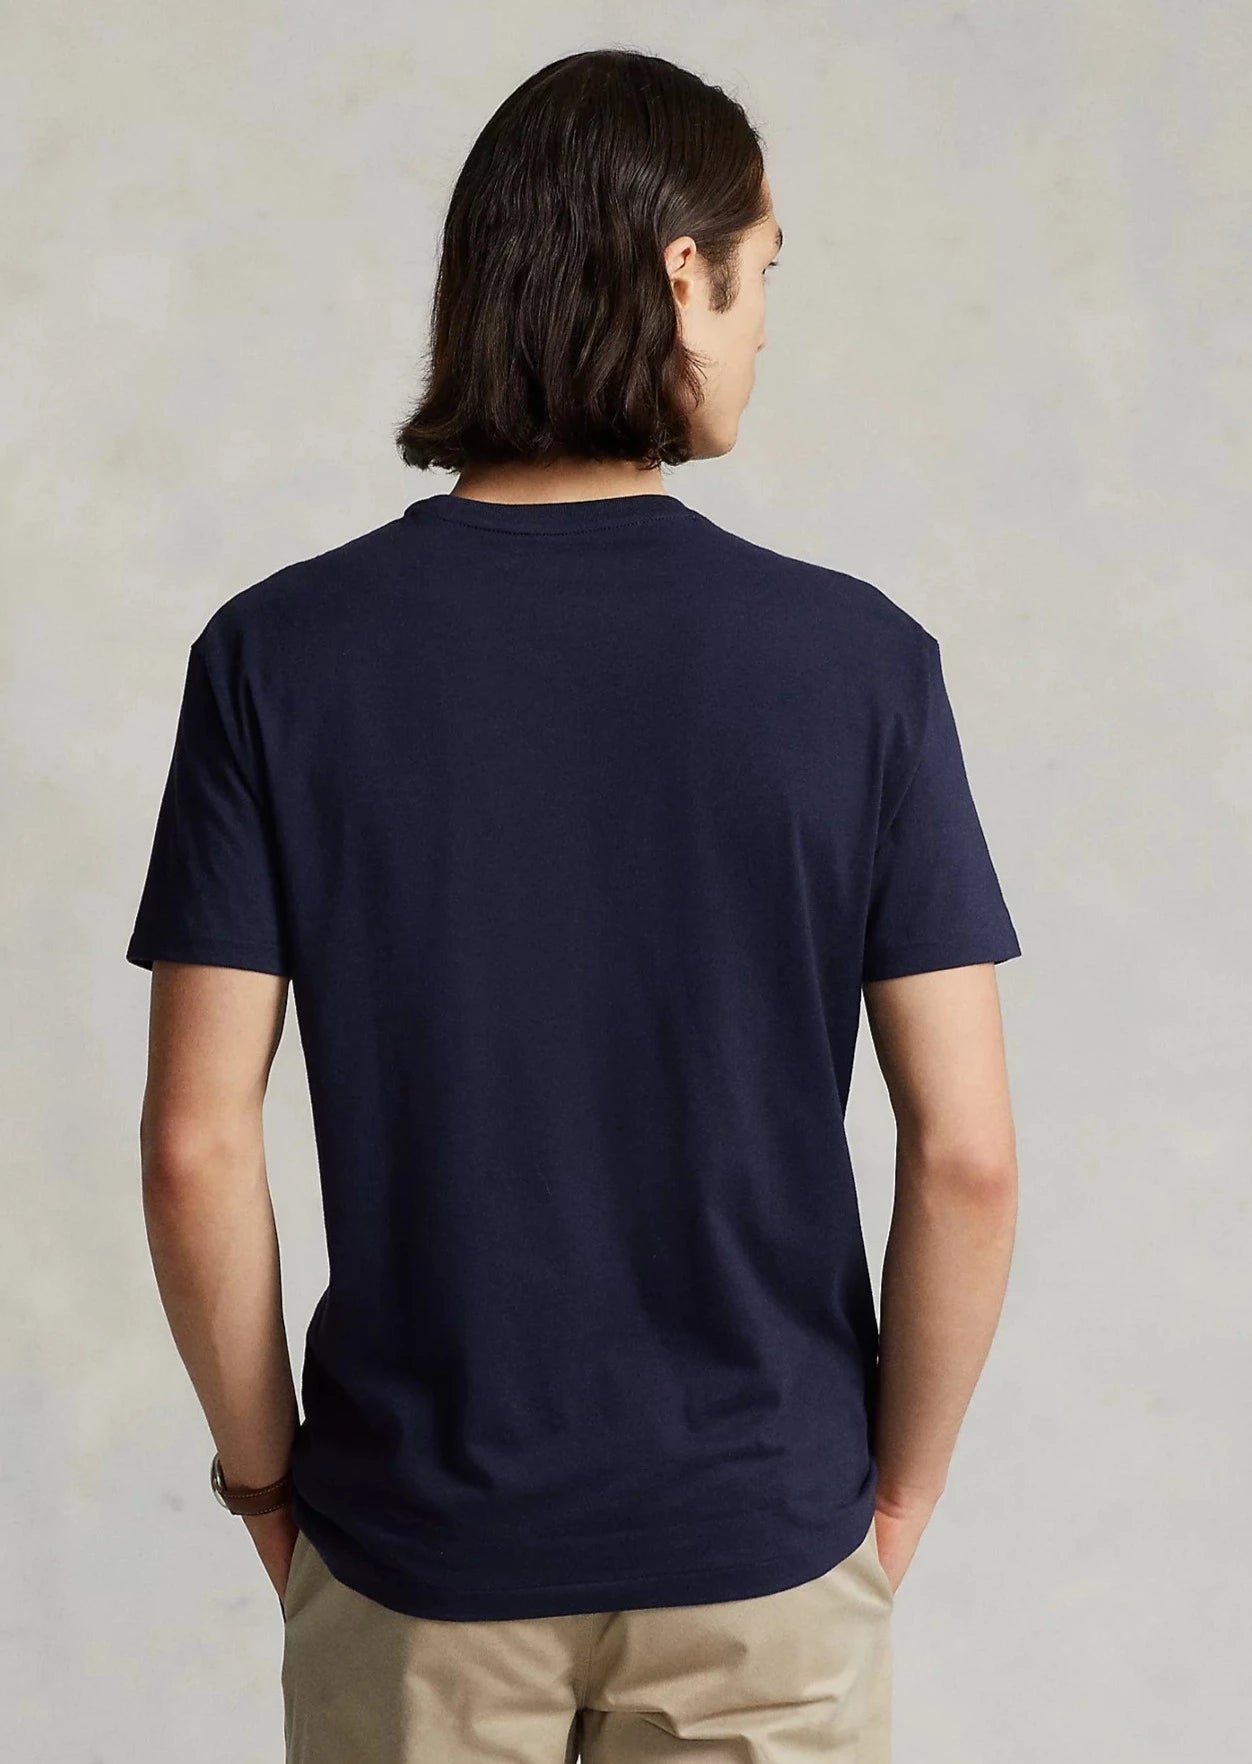 T-Shirt homme Ralph Lauren ajusté marine | Georgespaul